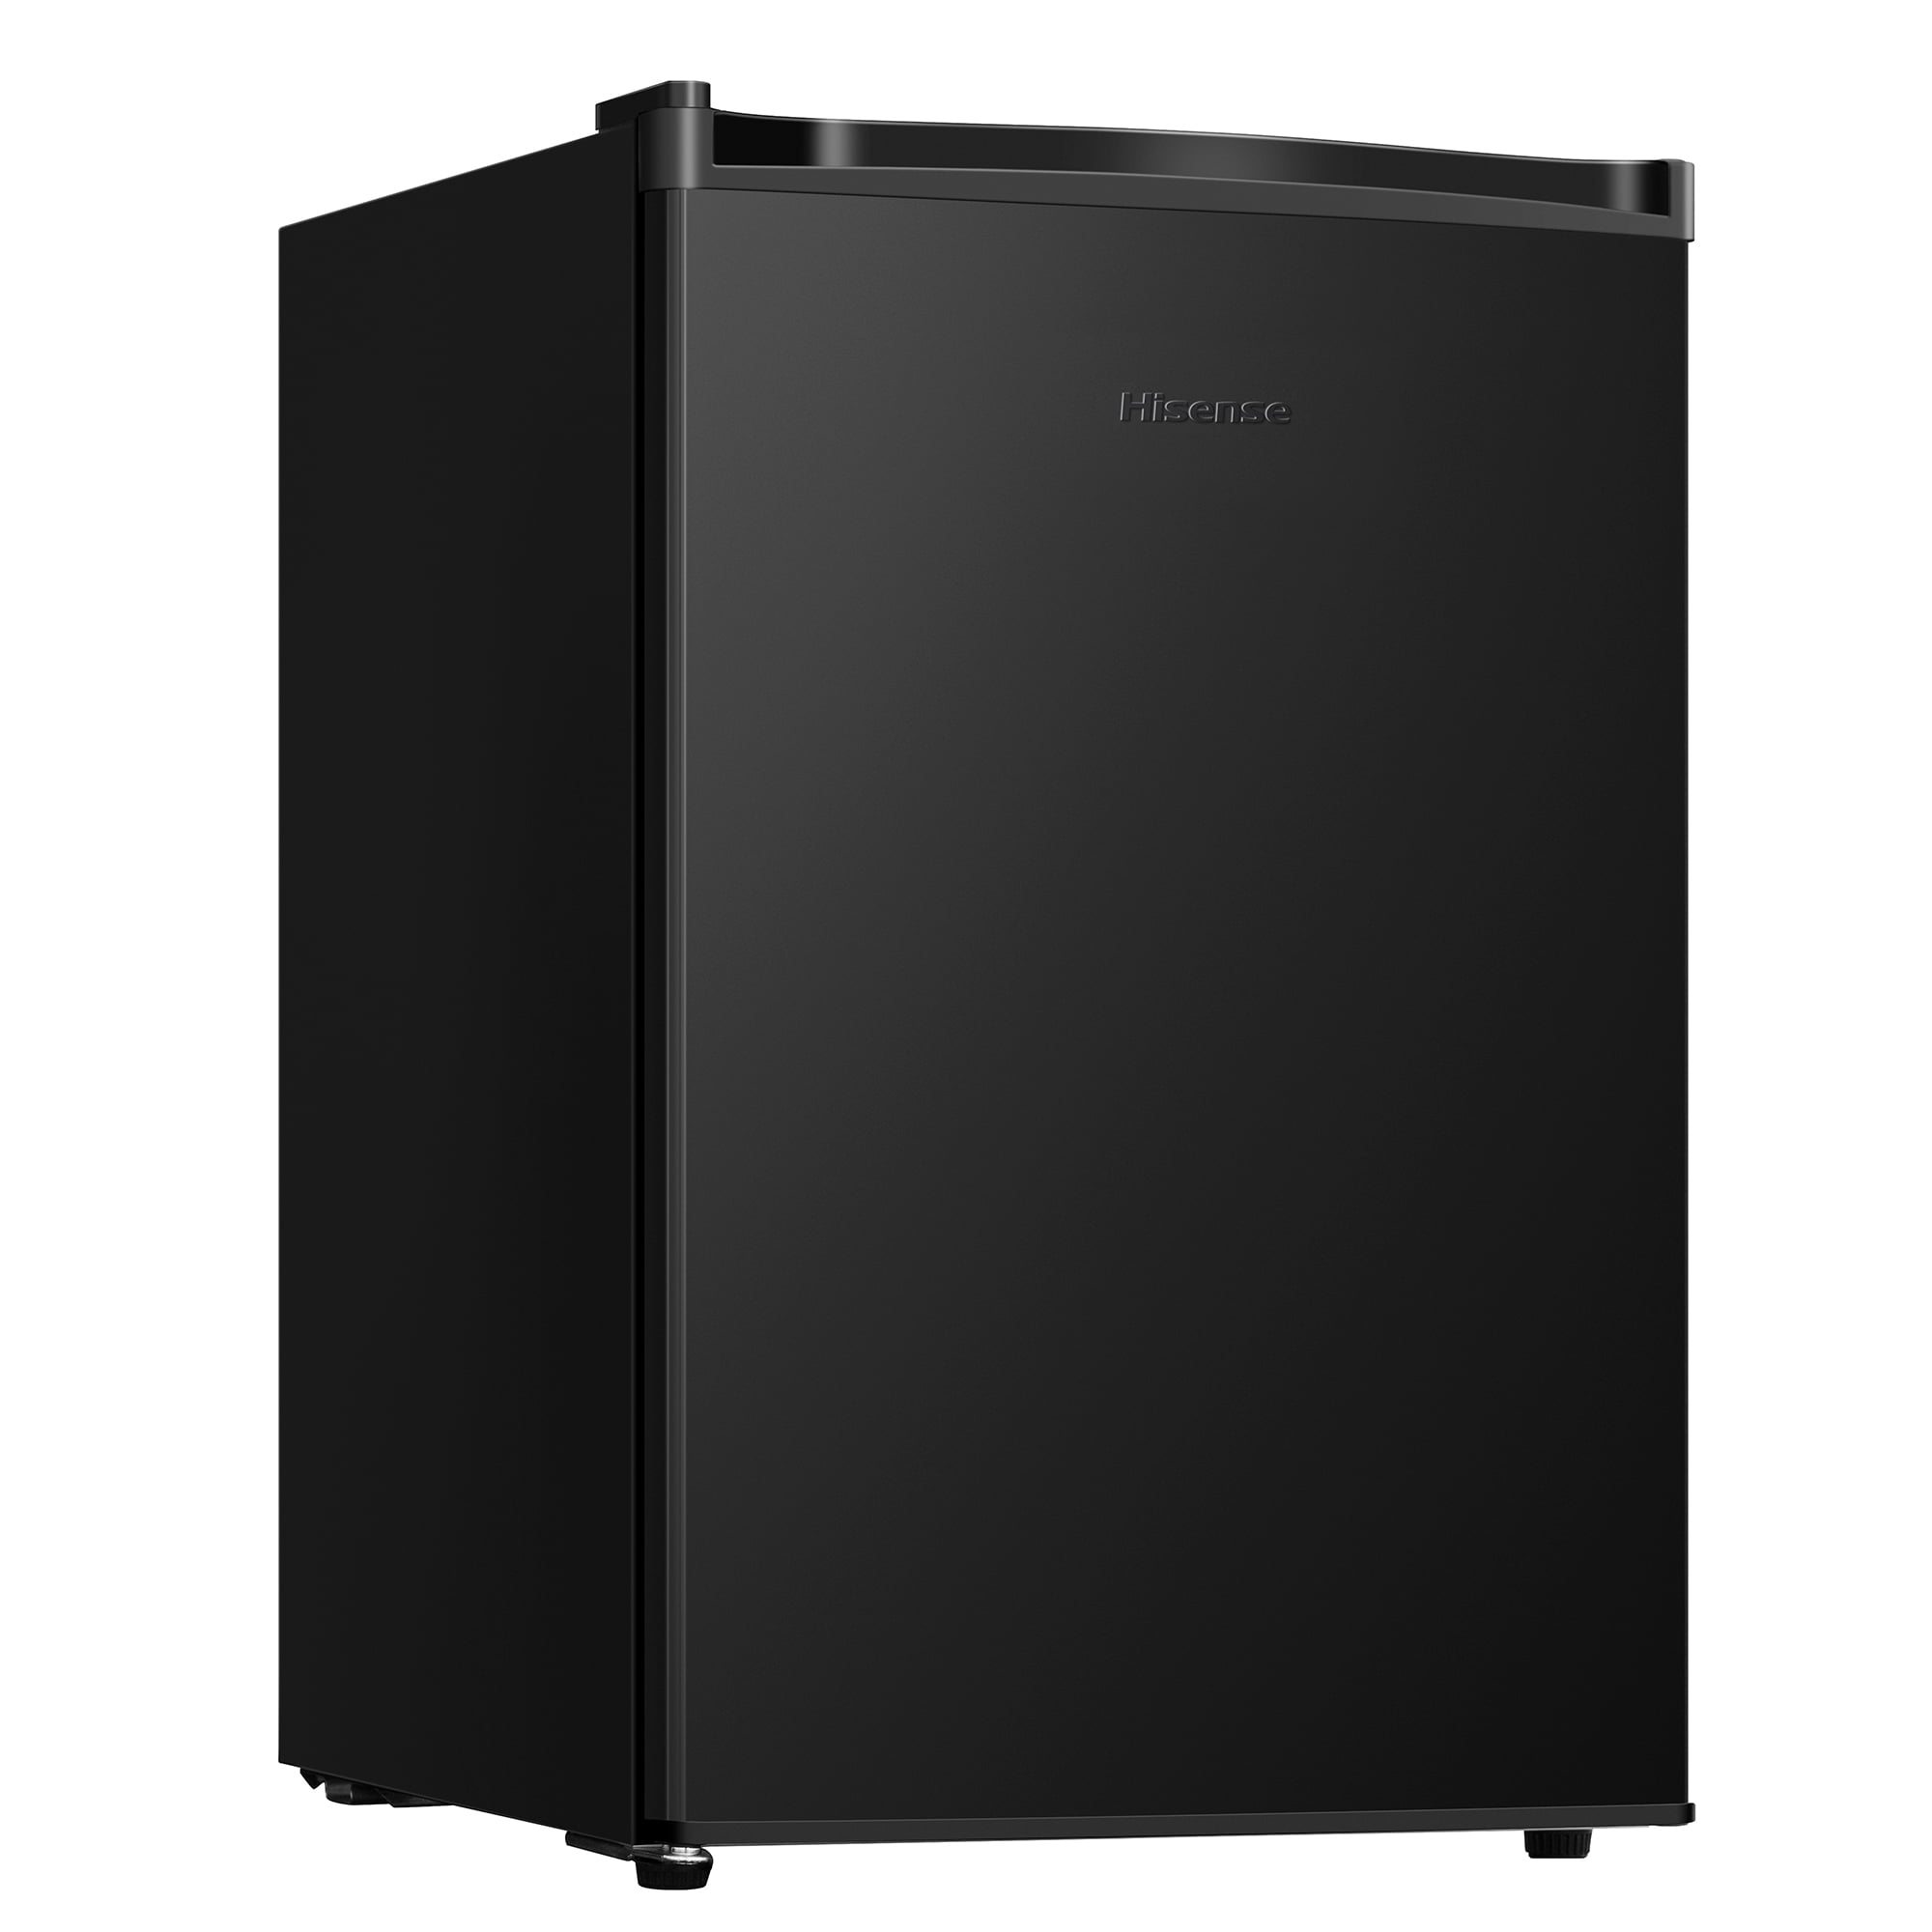 Hisense Refrigerator Rebate